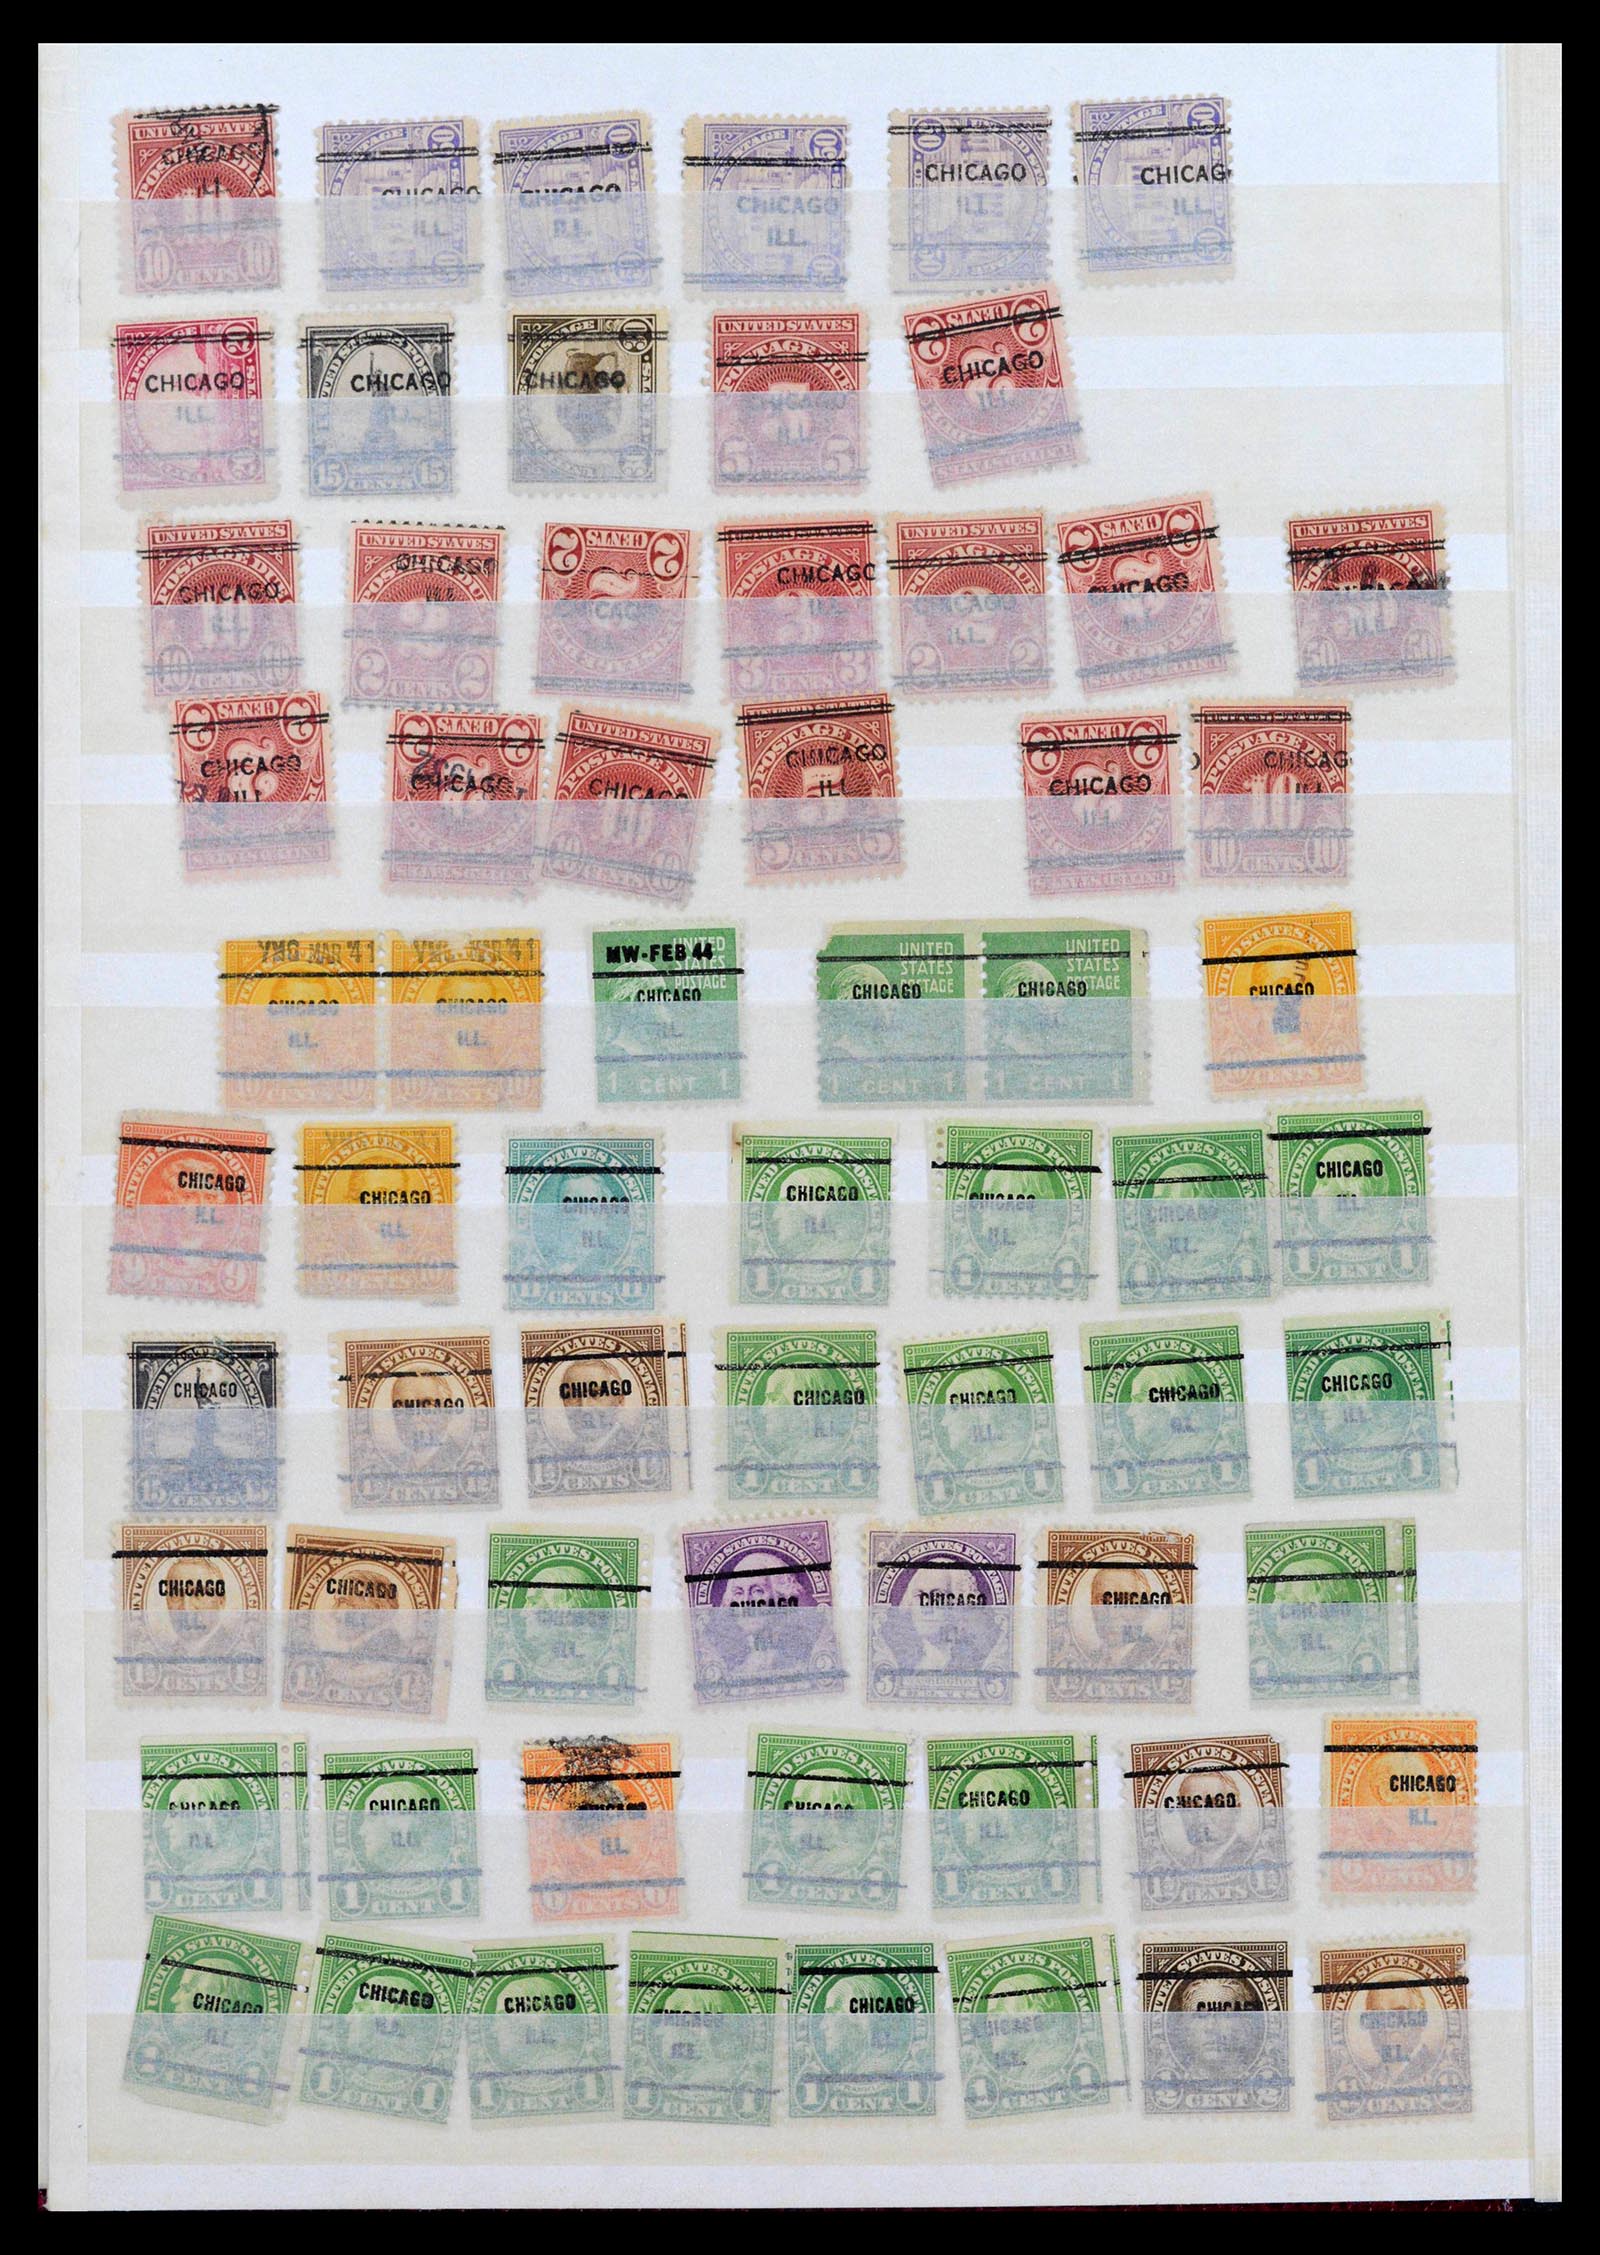 39366 0004 - Stamp collection 39366 USA precancels 1892-1940.